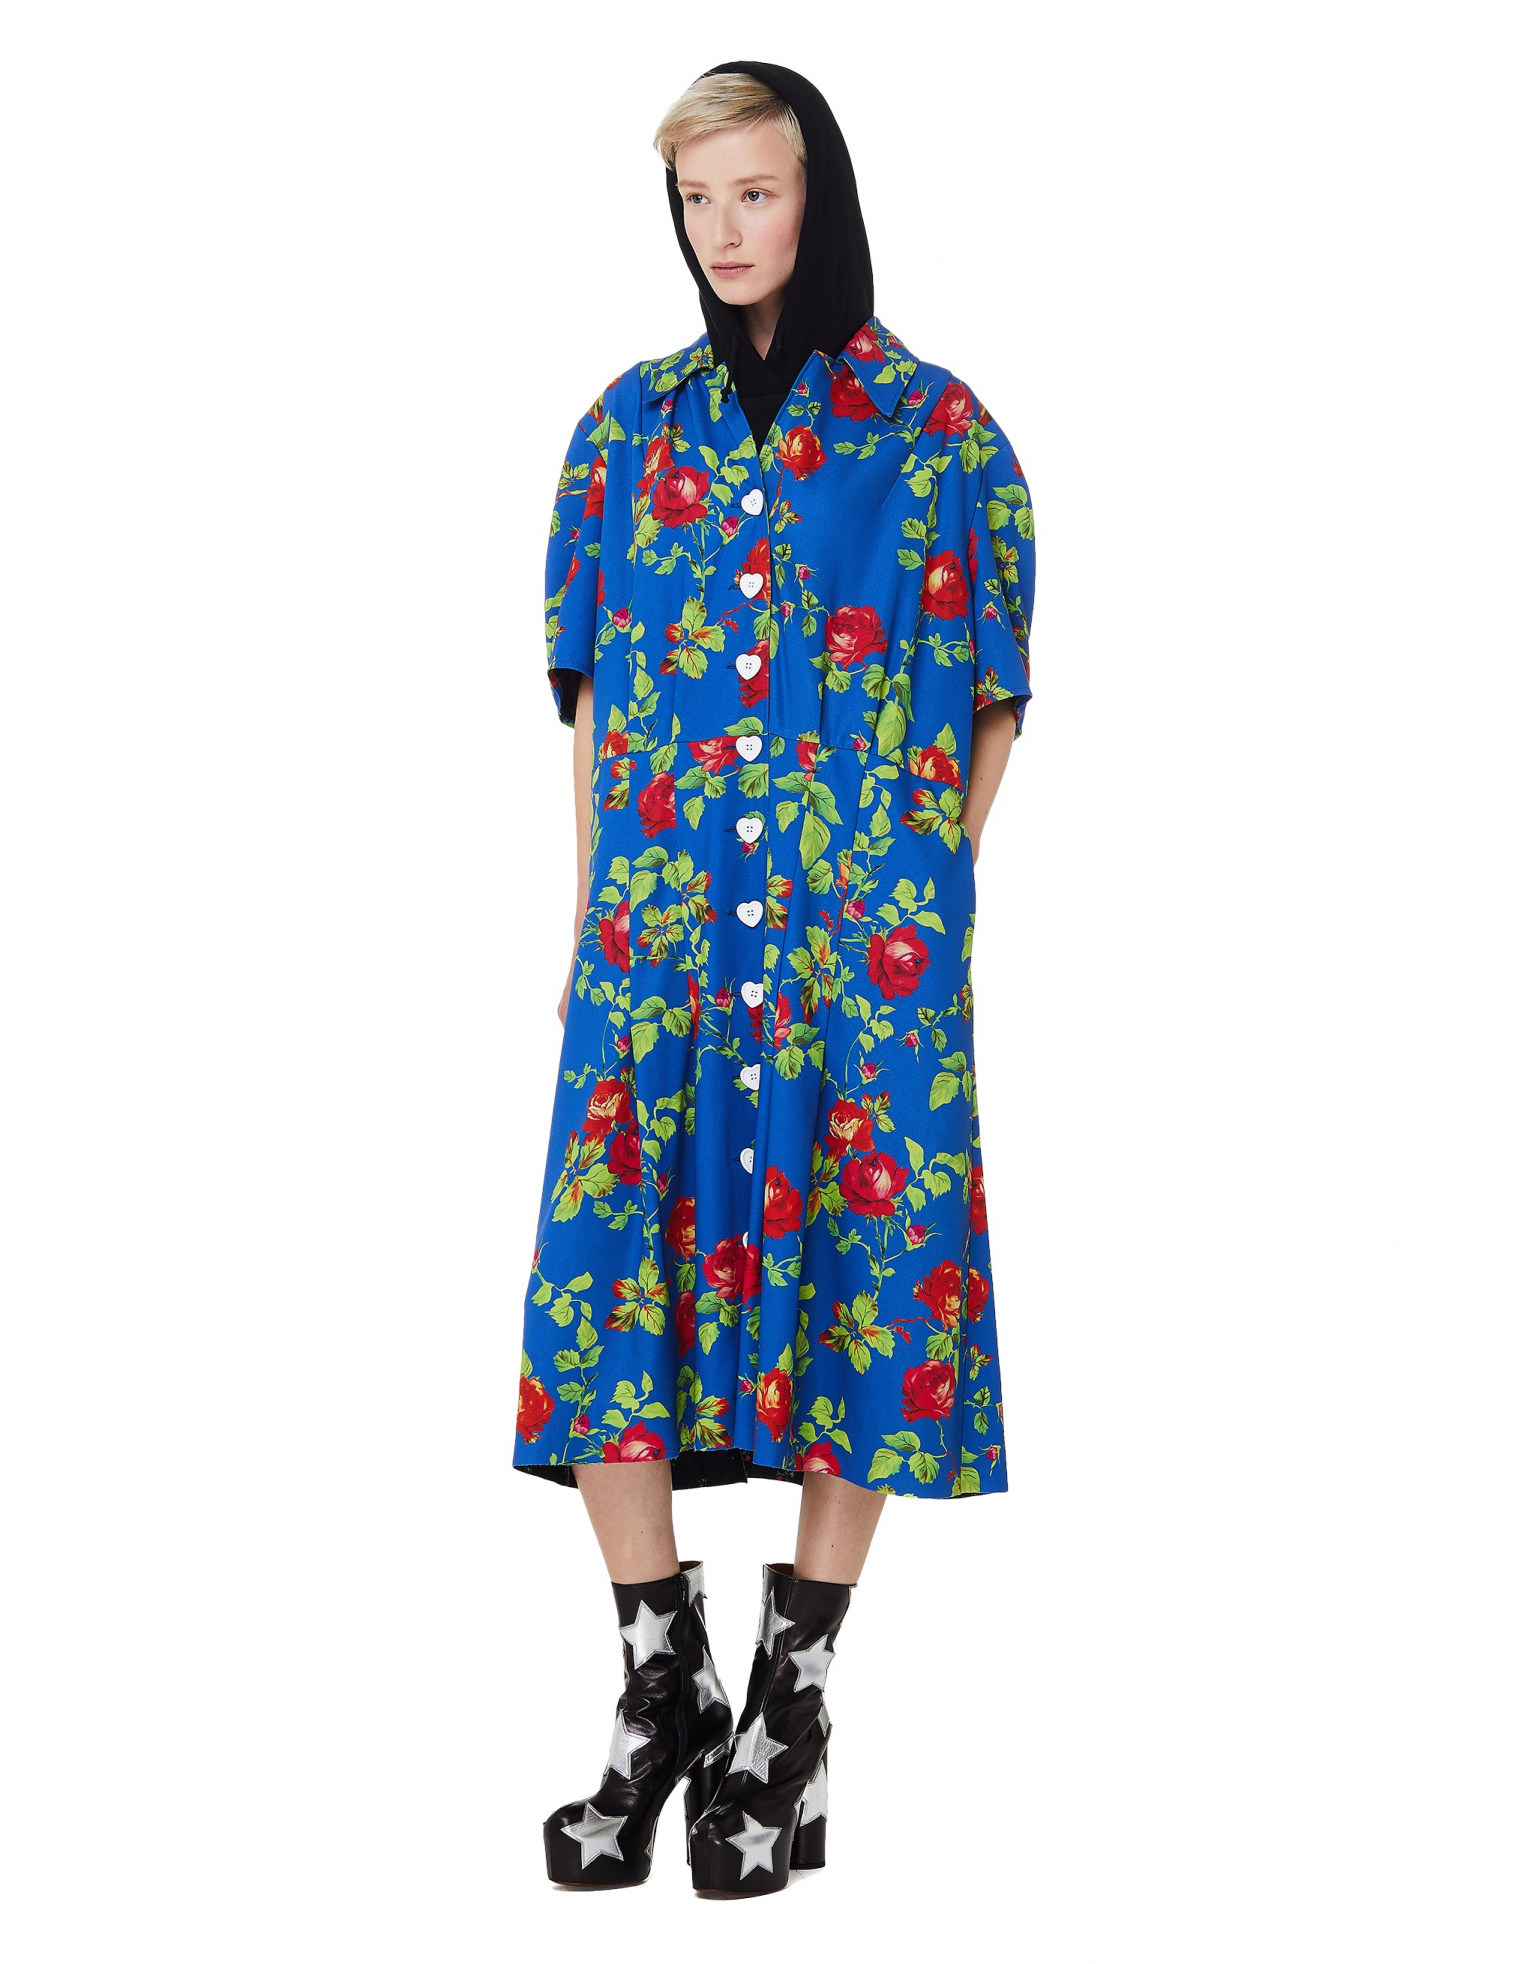 VETEMENTS Anarchy Hooded Flower Printed Dress